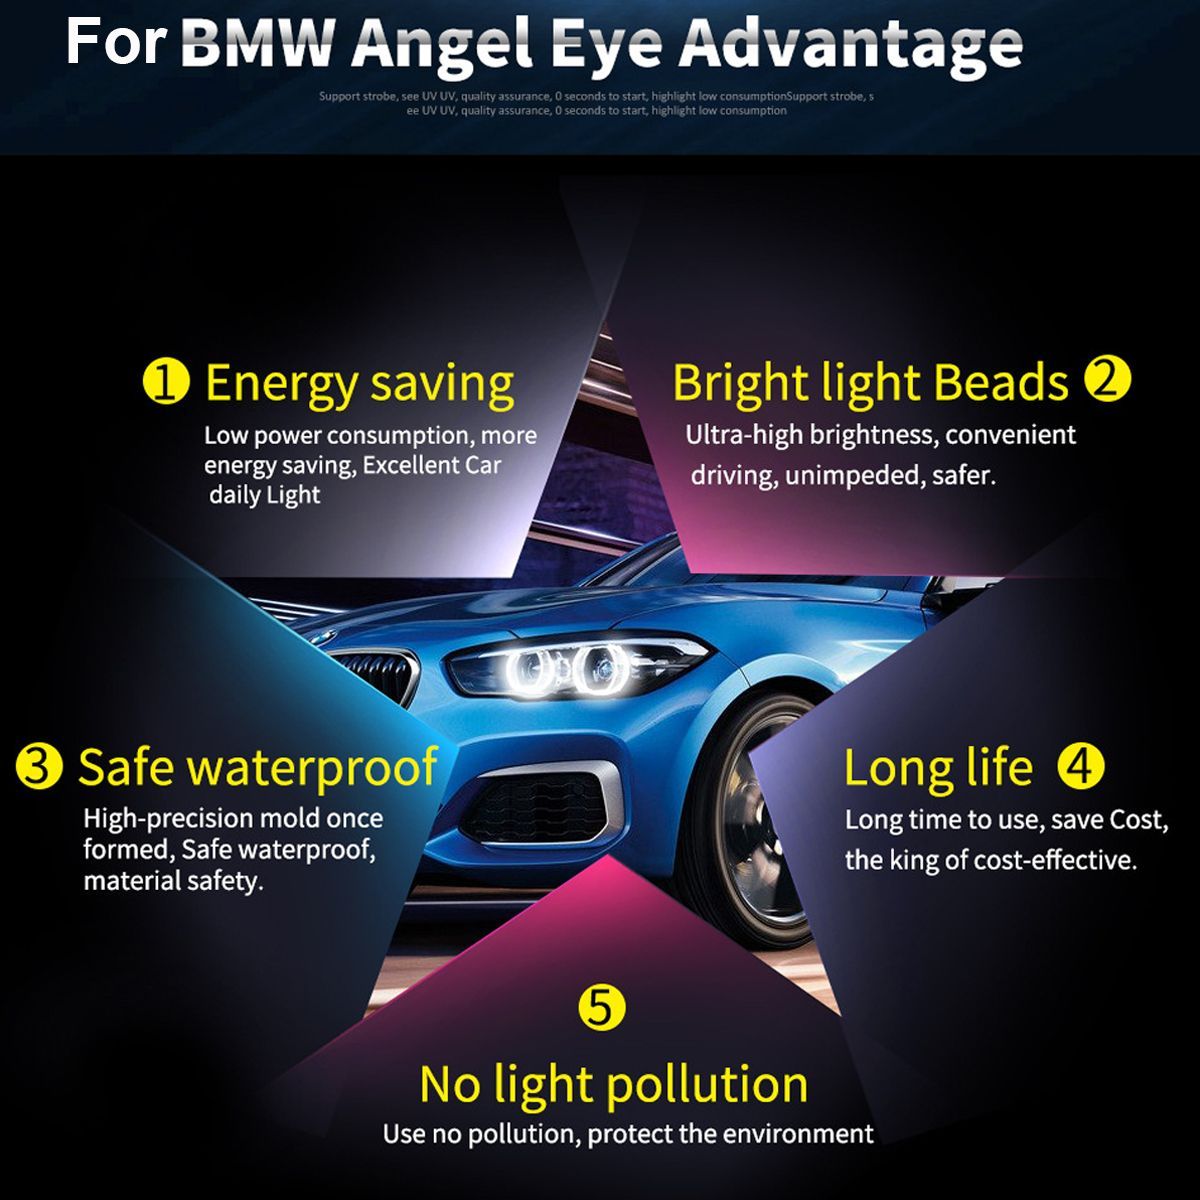 2PCS-H8-LED-Angel-Eyes-Halo-Ring-Headlights-Bulbs-40W-6500K-Lights-with-Resistors-for-BMW-E90-E60-1614848